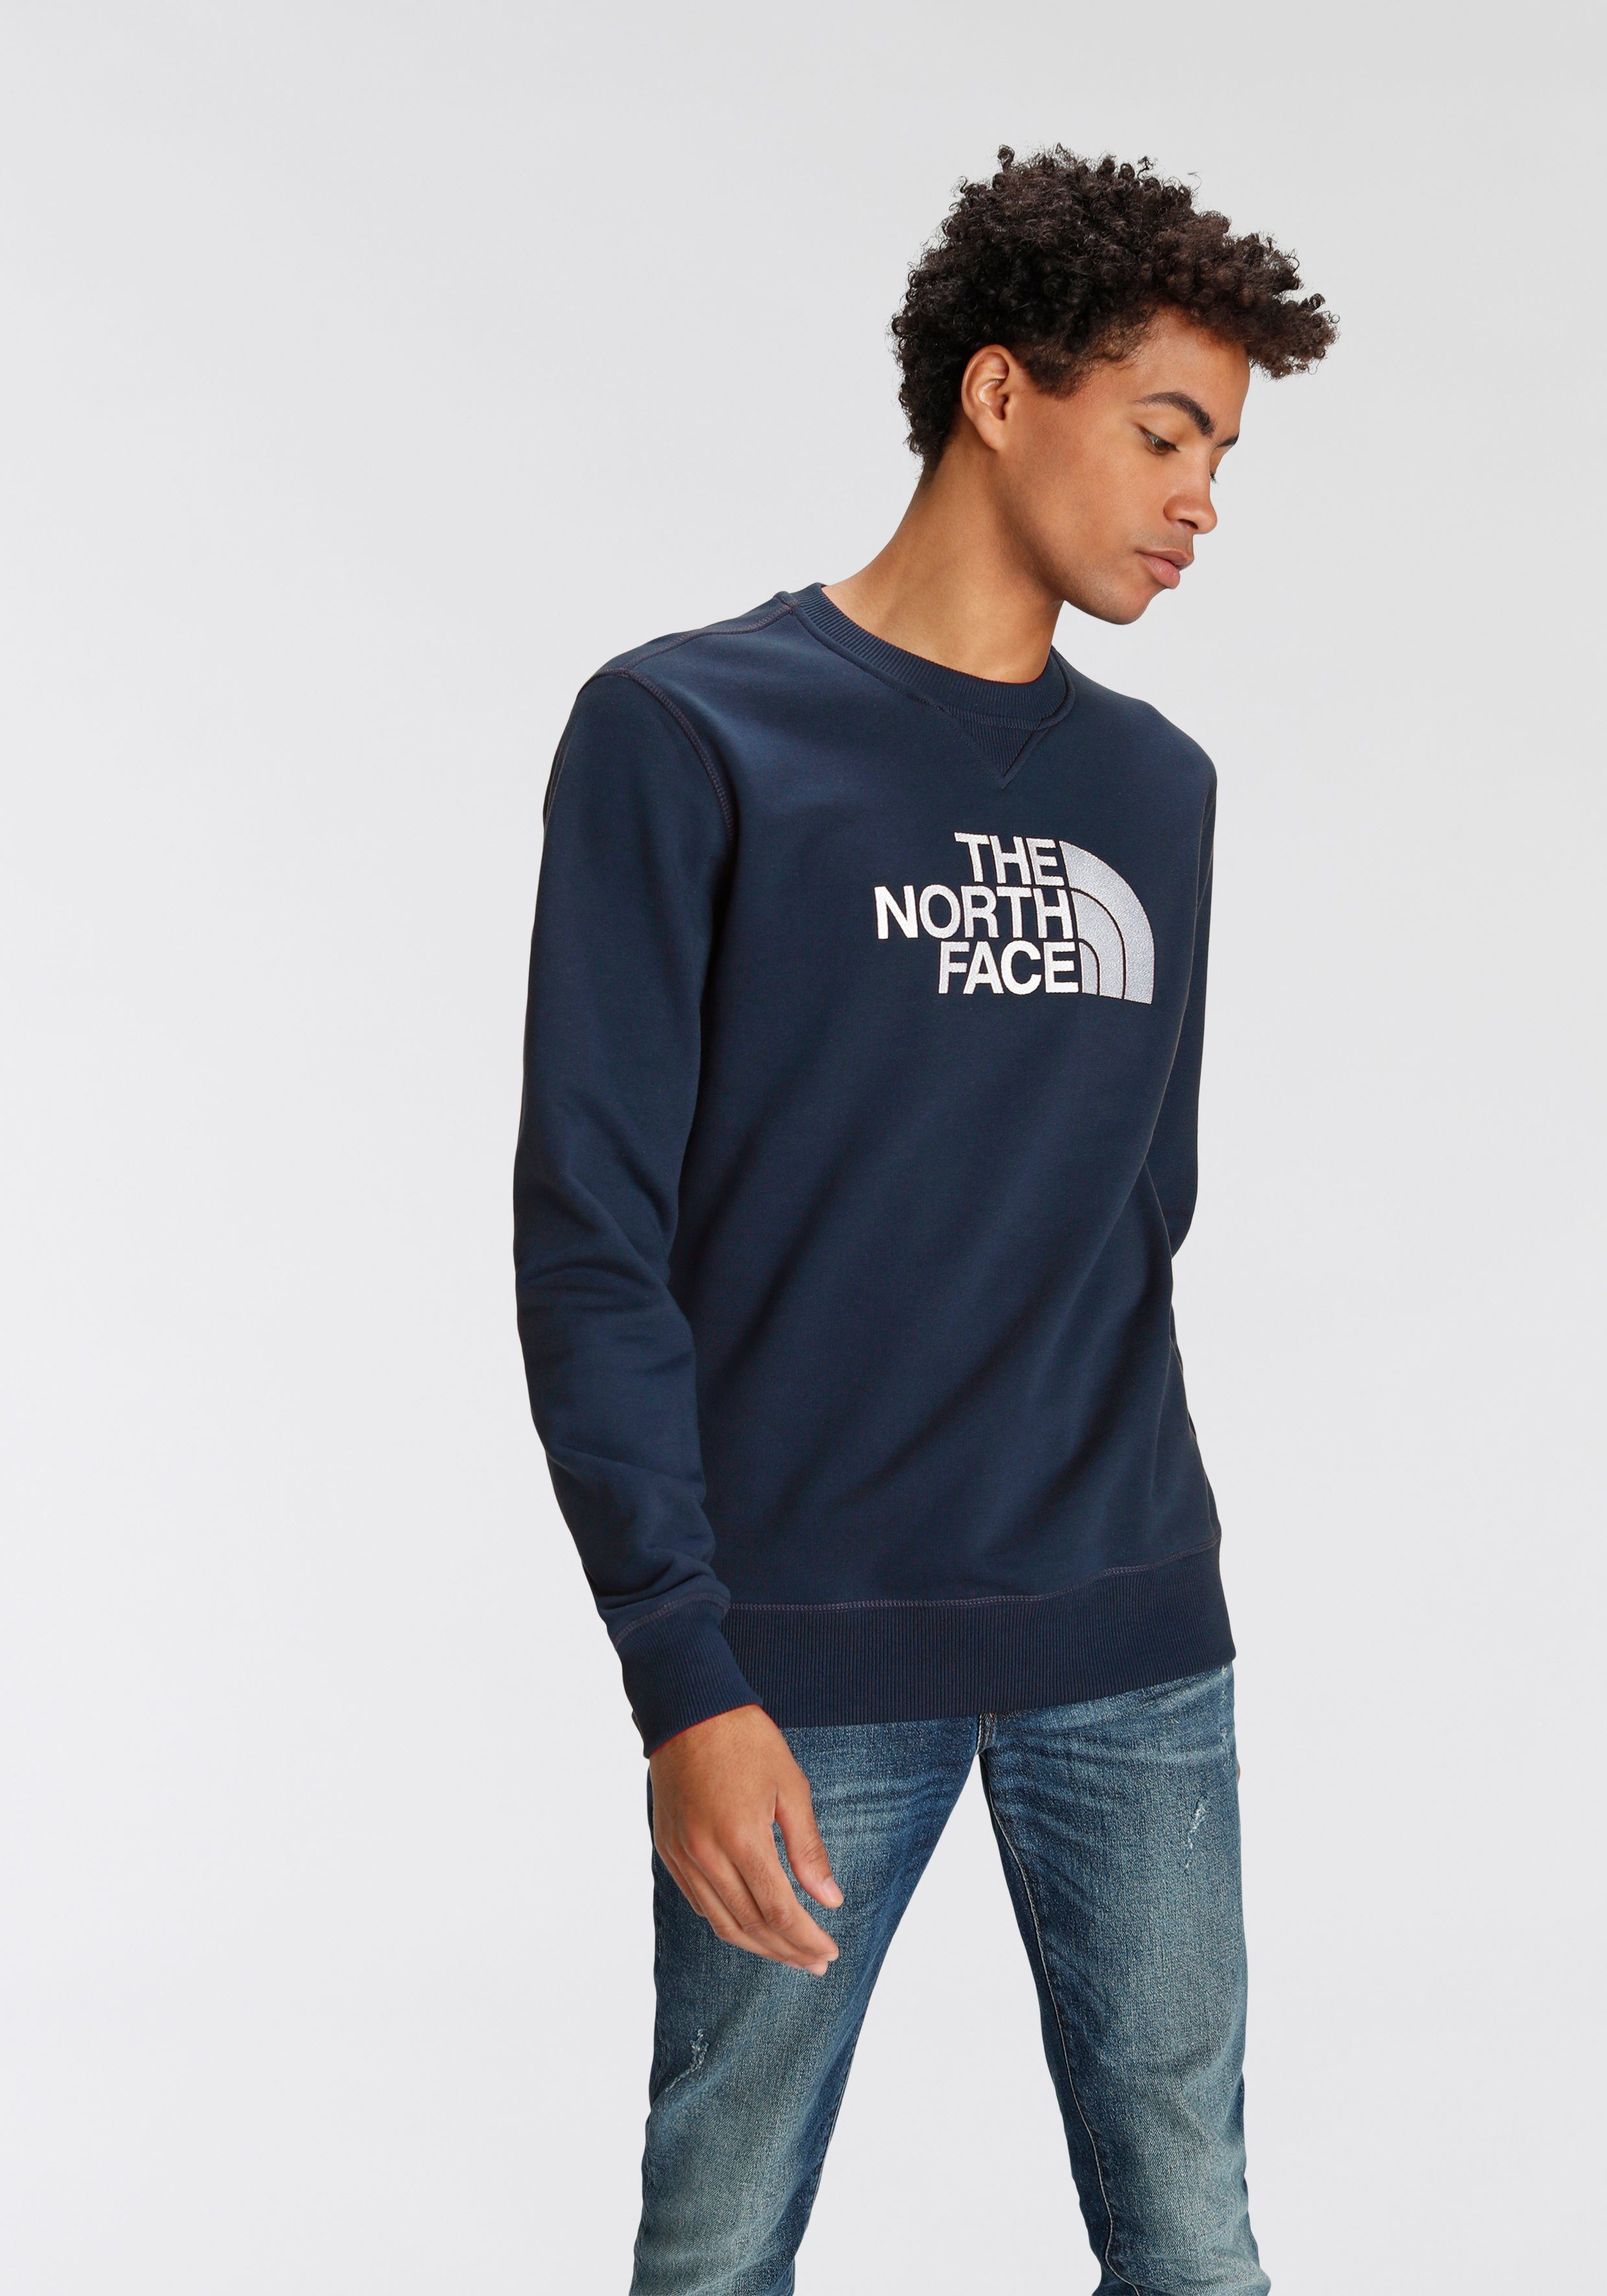 The North Face DREW PEAK marine Sweatshirt